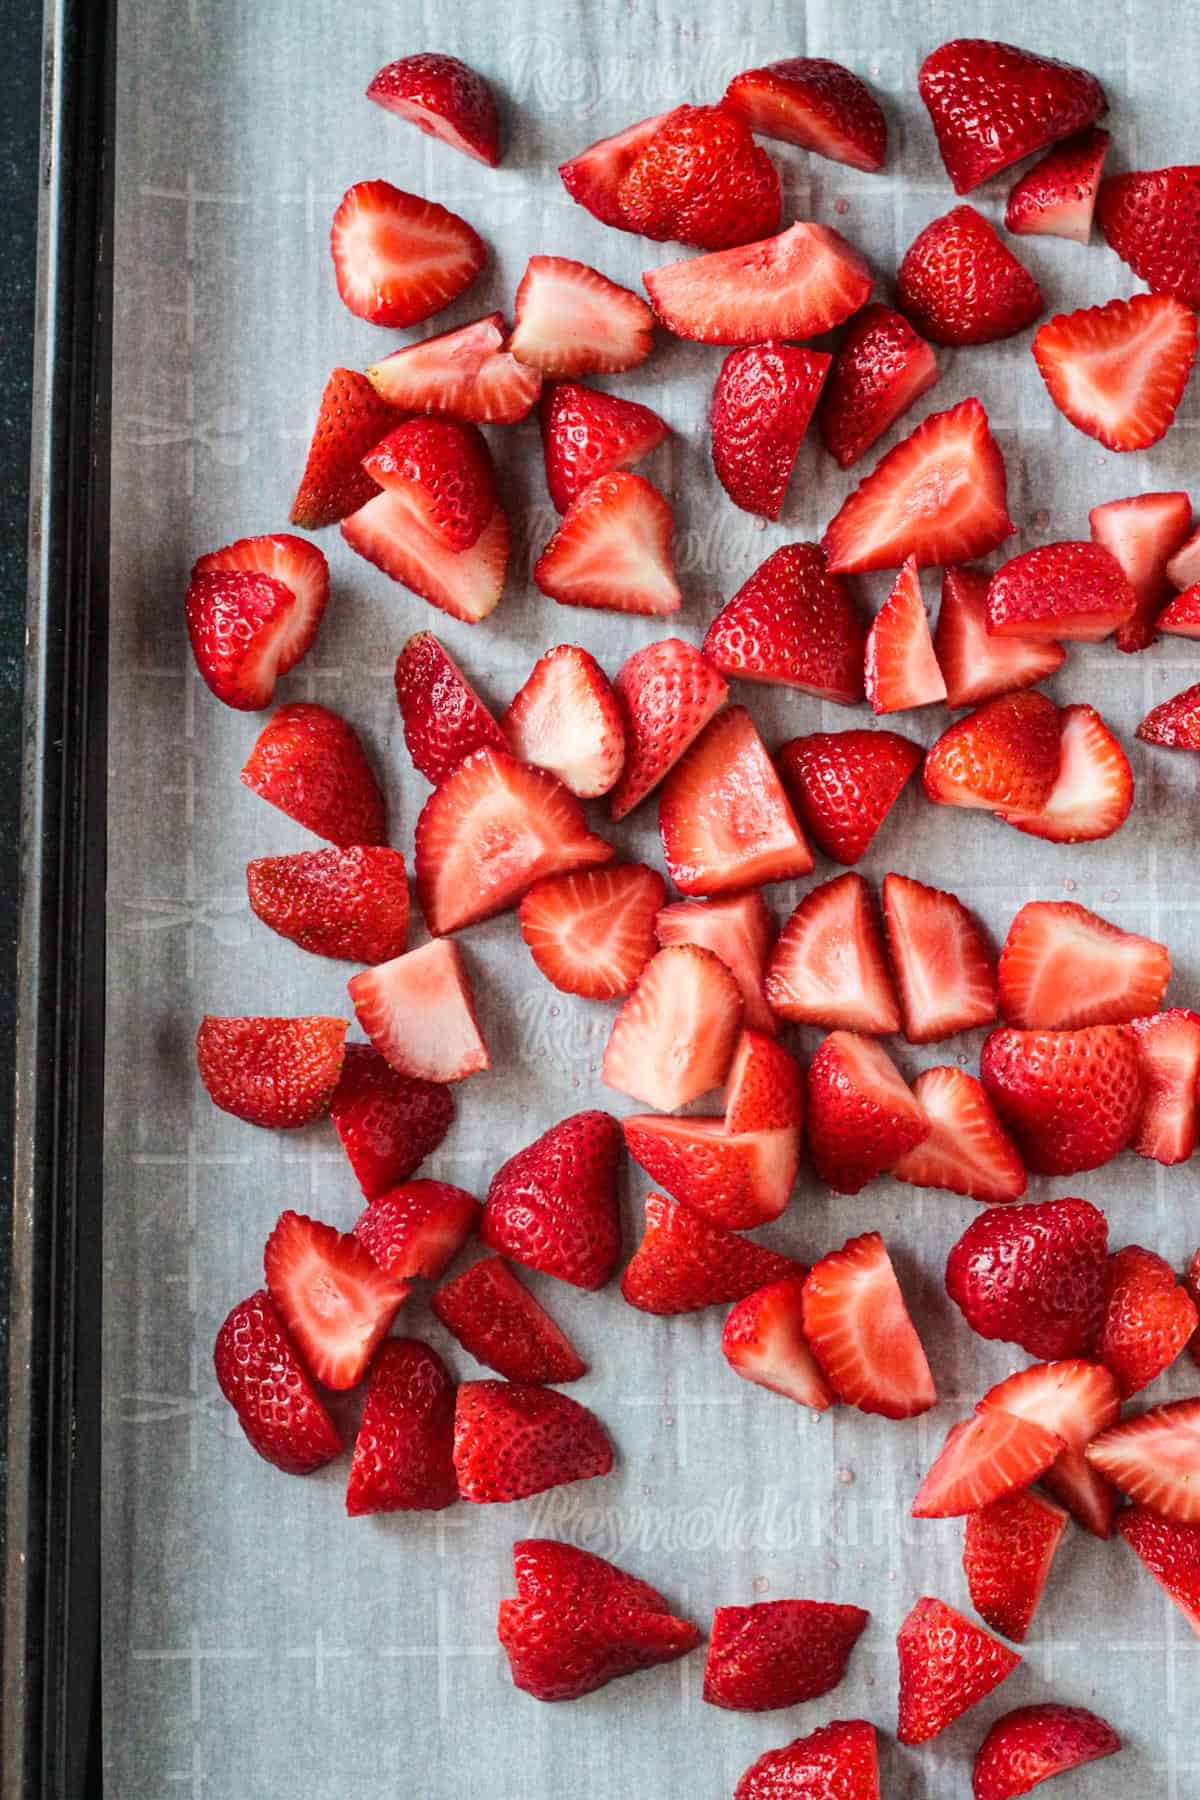 Fresh sliced strawberries on a baking sheet.